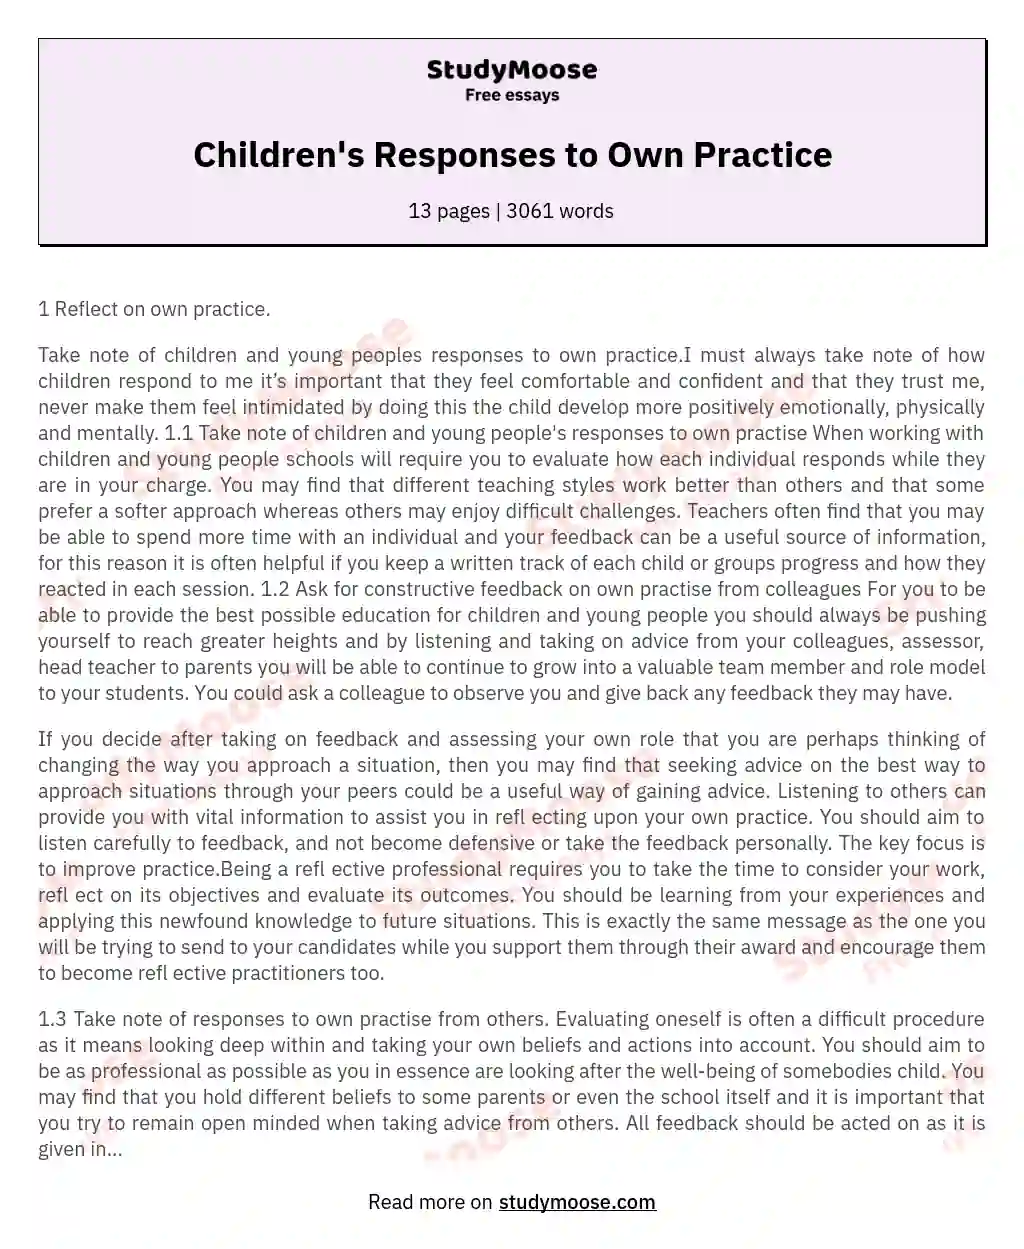 Children's Responses to Own Practice essay